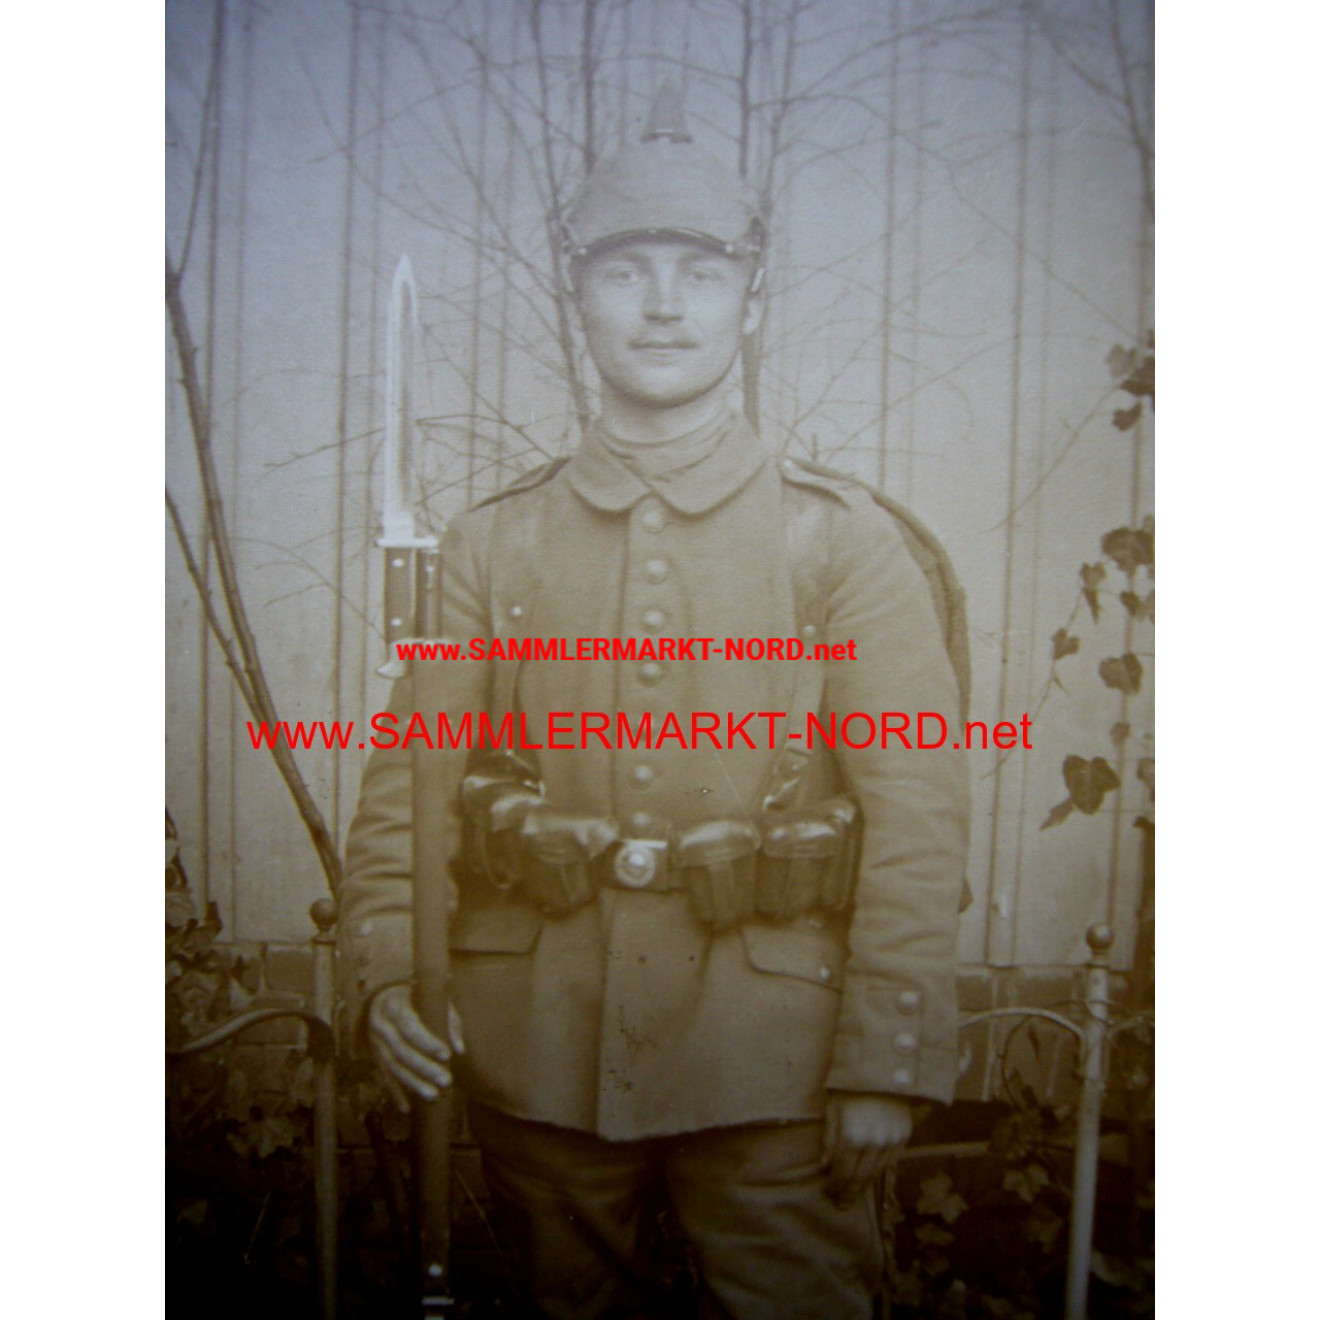 Field gray infantryman with equipment - portrait photo